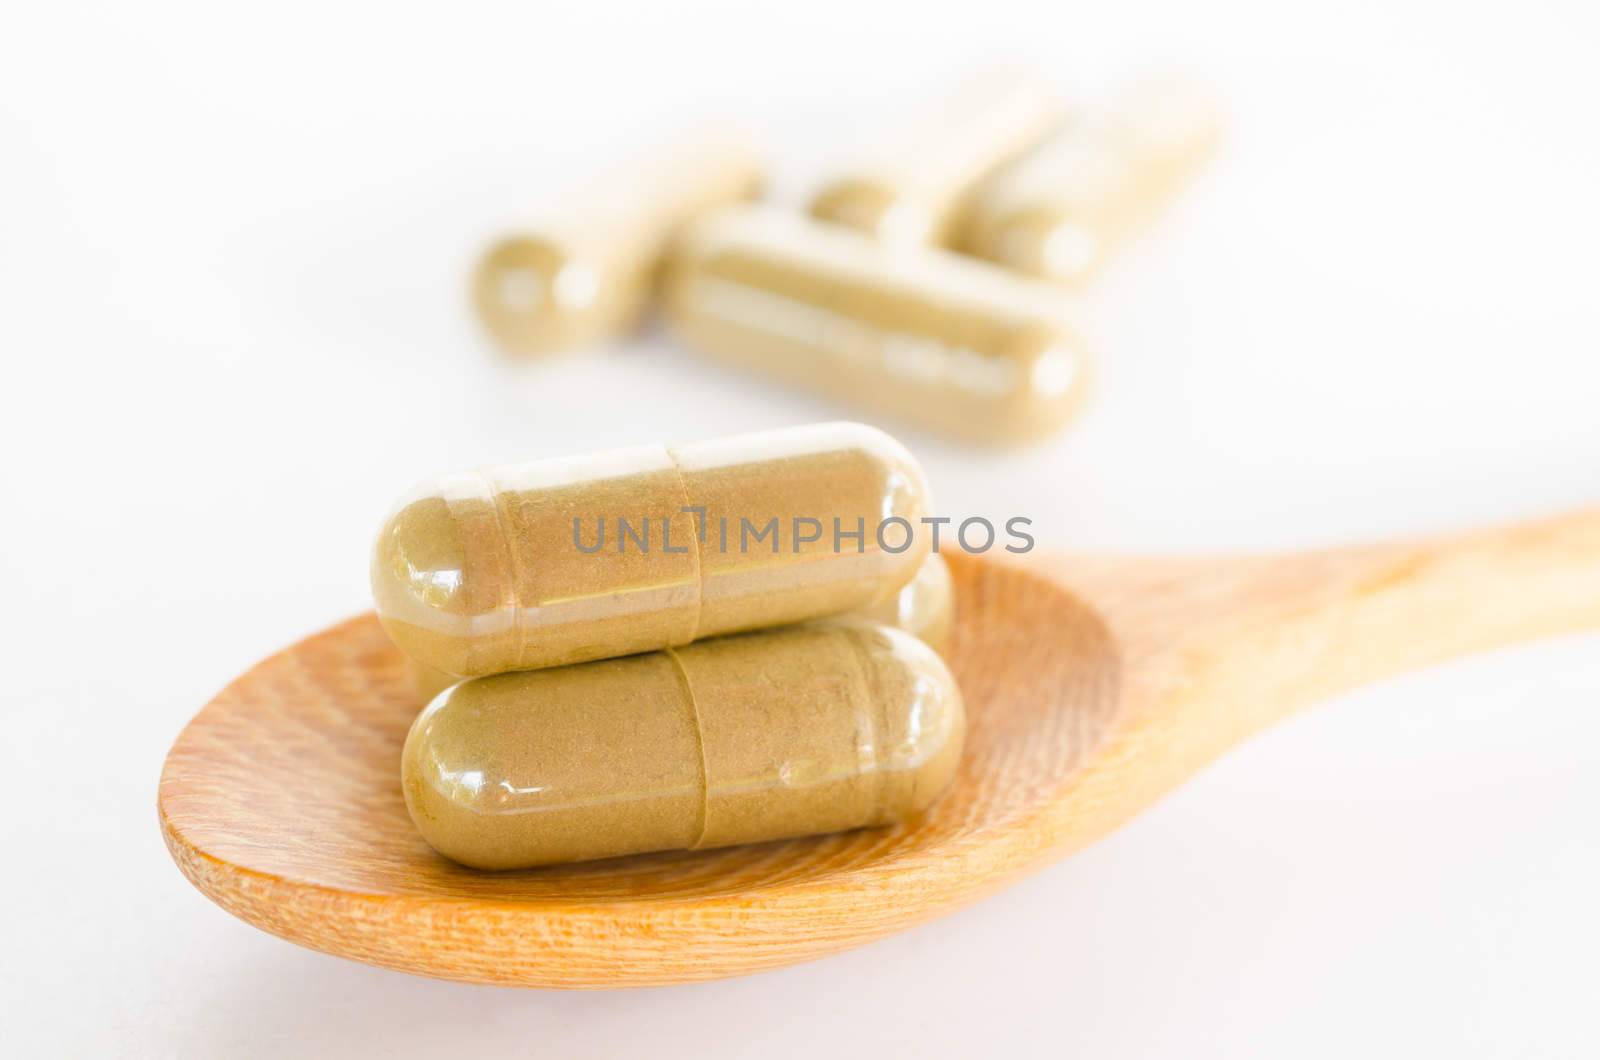 herbal drug capsule on wooden spoon on white background.